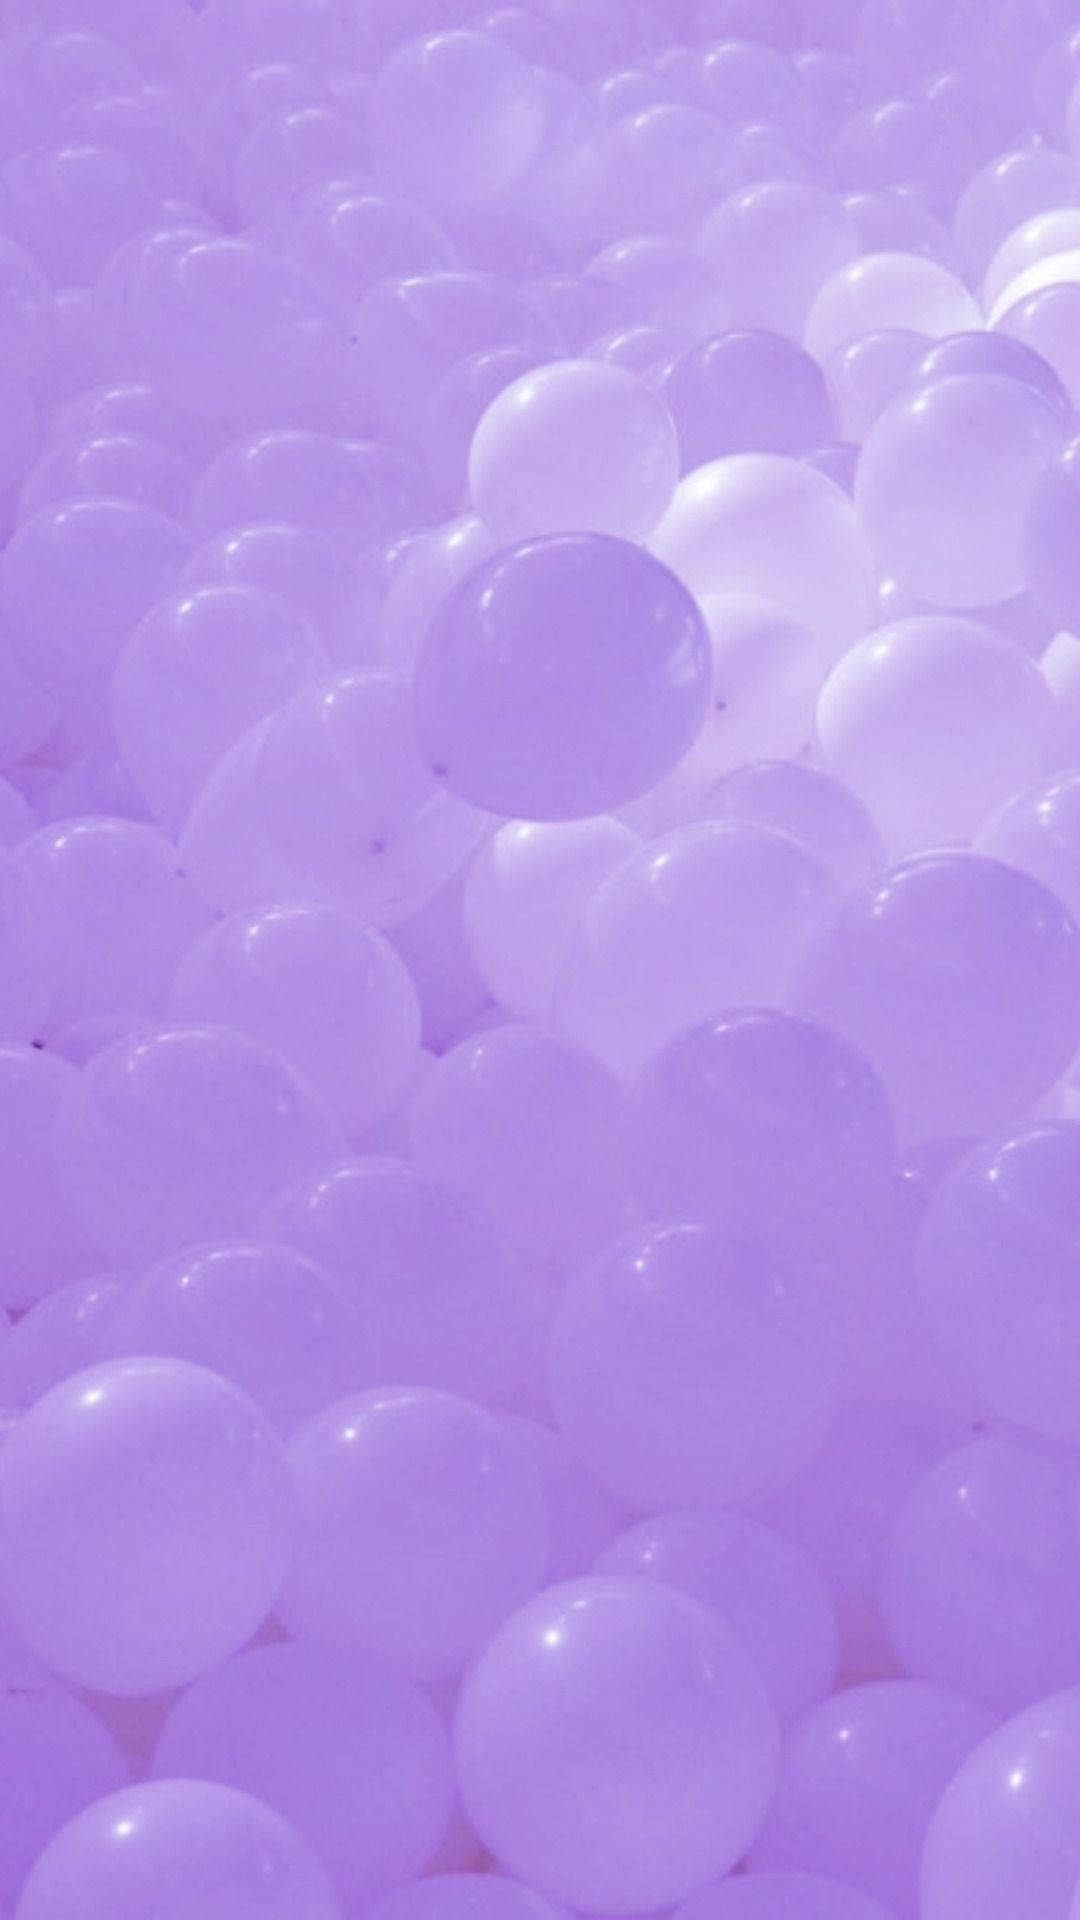 Cute Purple Balloons Background